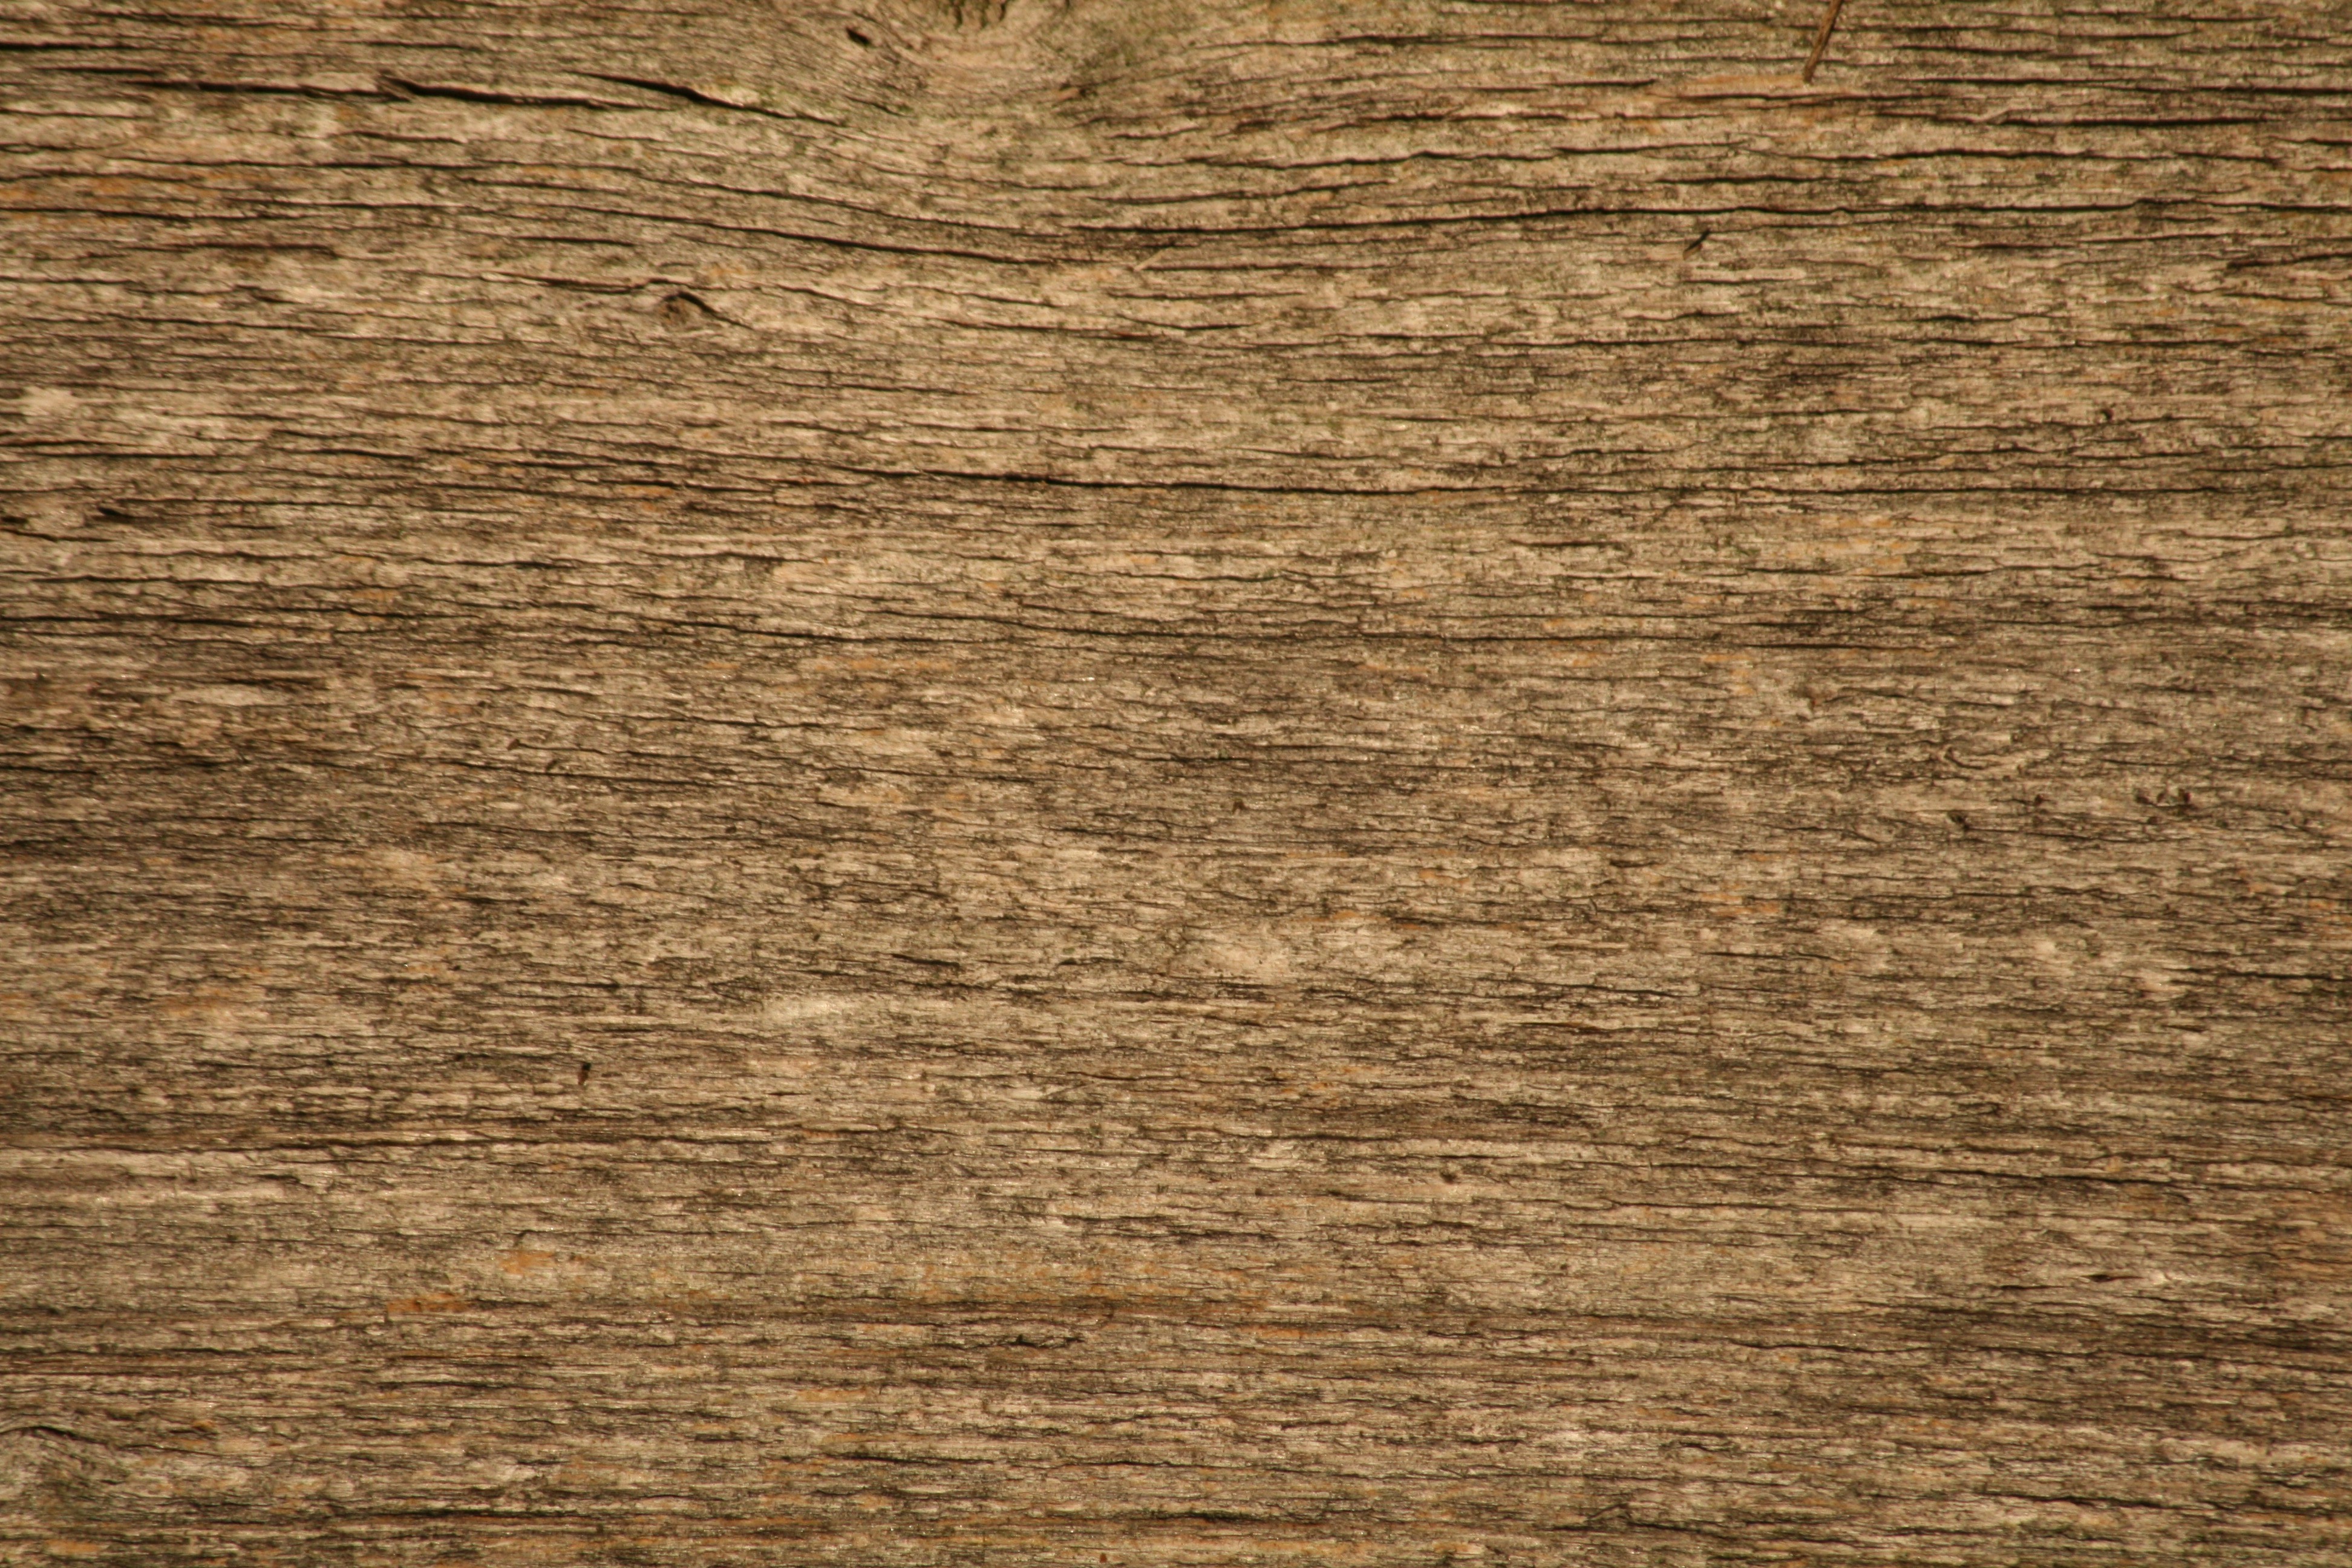 Wood Grain Textures | Texturemate.com